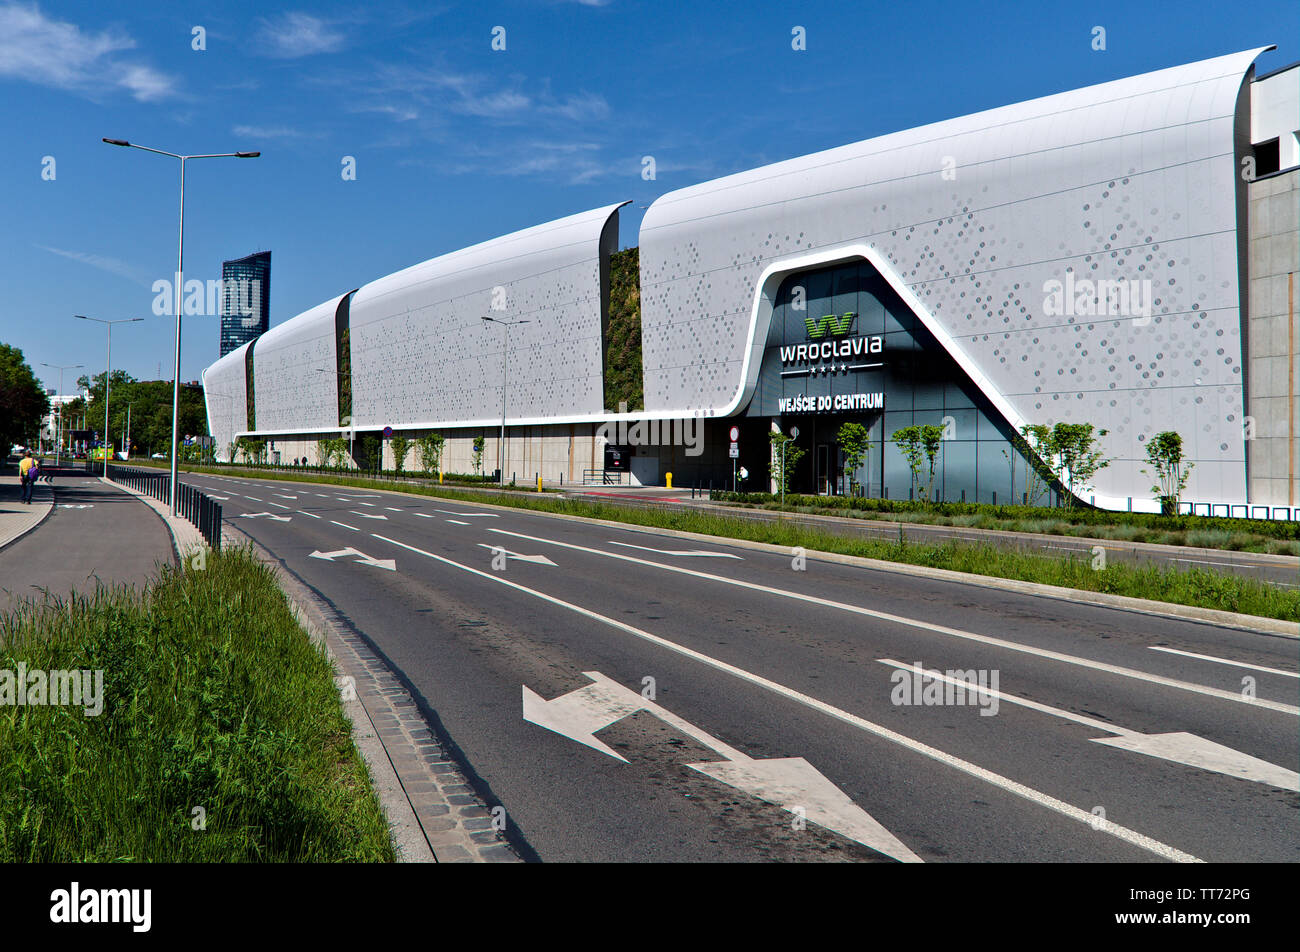 Einkaufszentrum Fassade in Breslau - Wroclavia Stockfoto